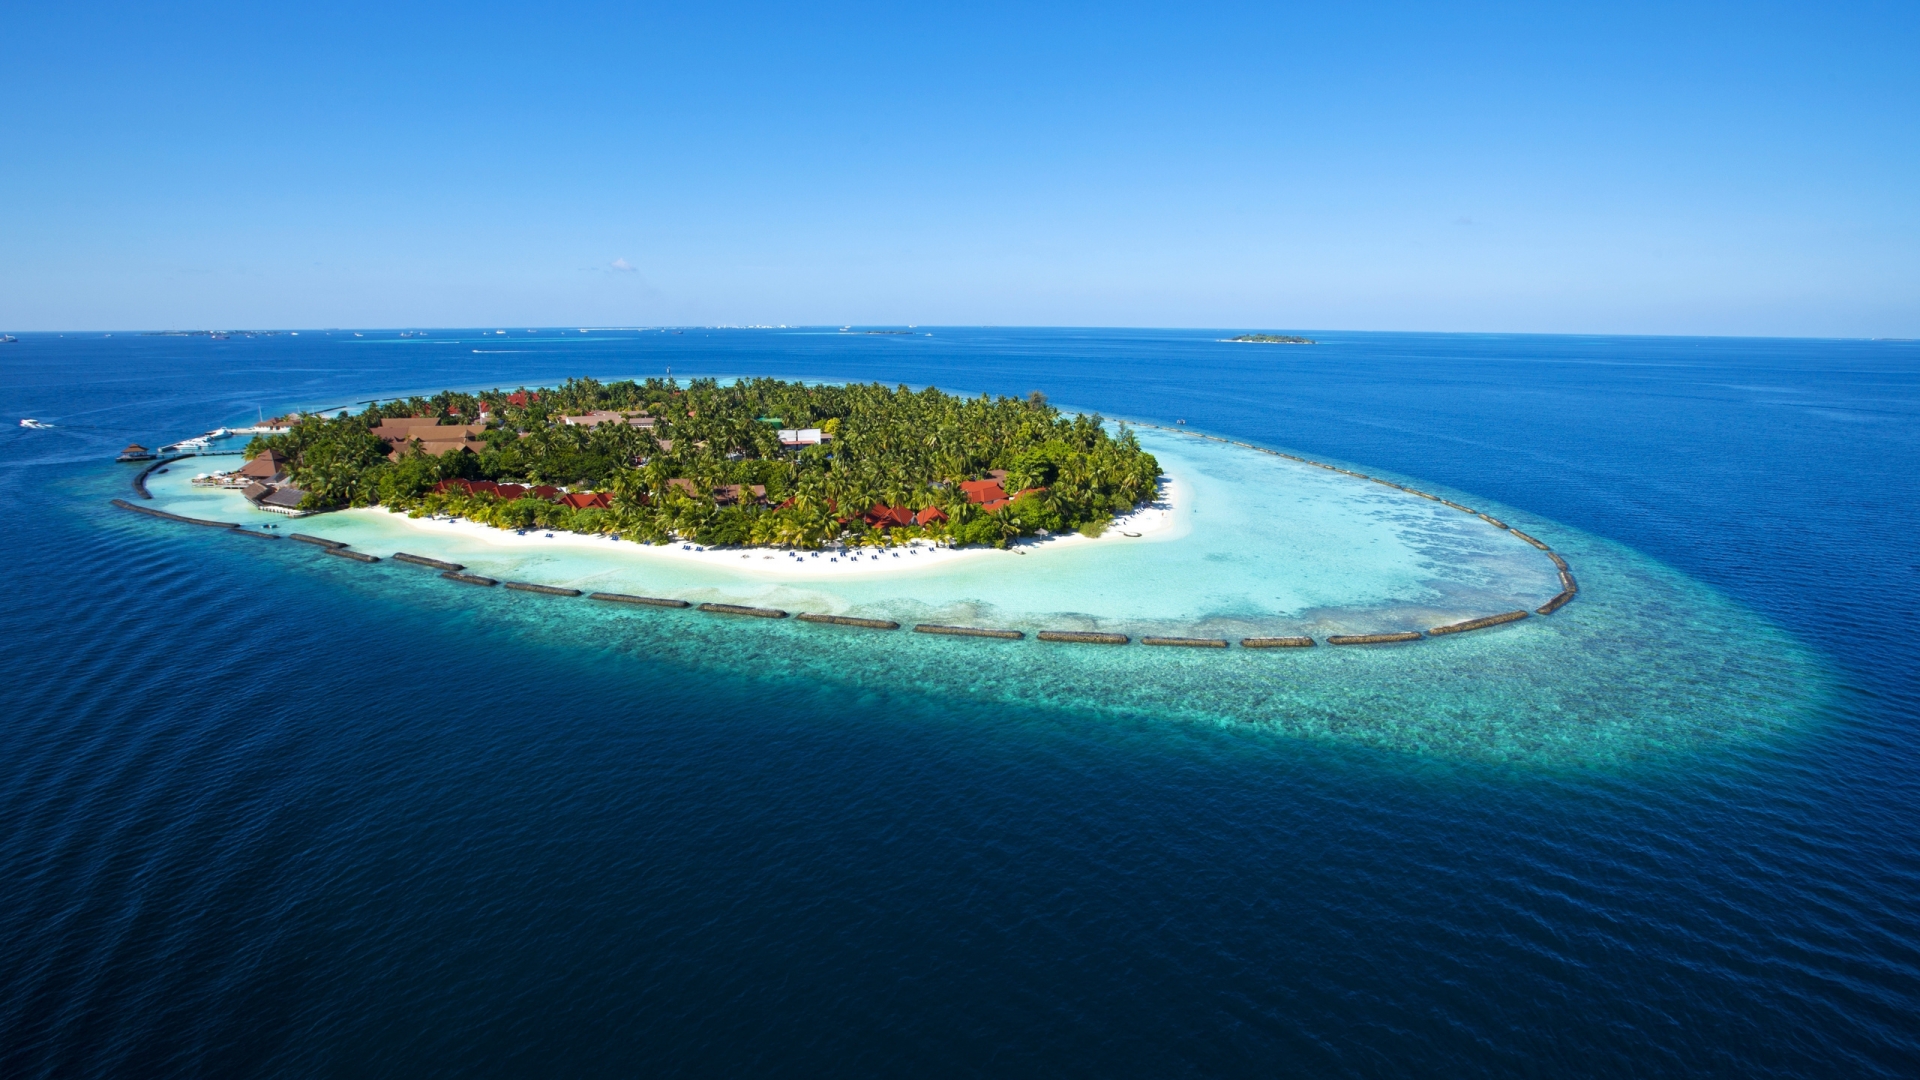 Amazing Maldives Island View for 1920 x 1080 HDTV 1080p resolution